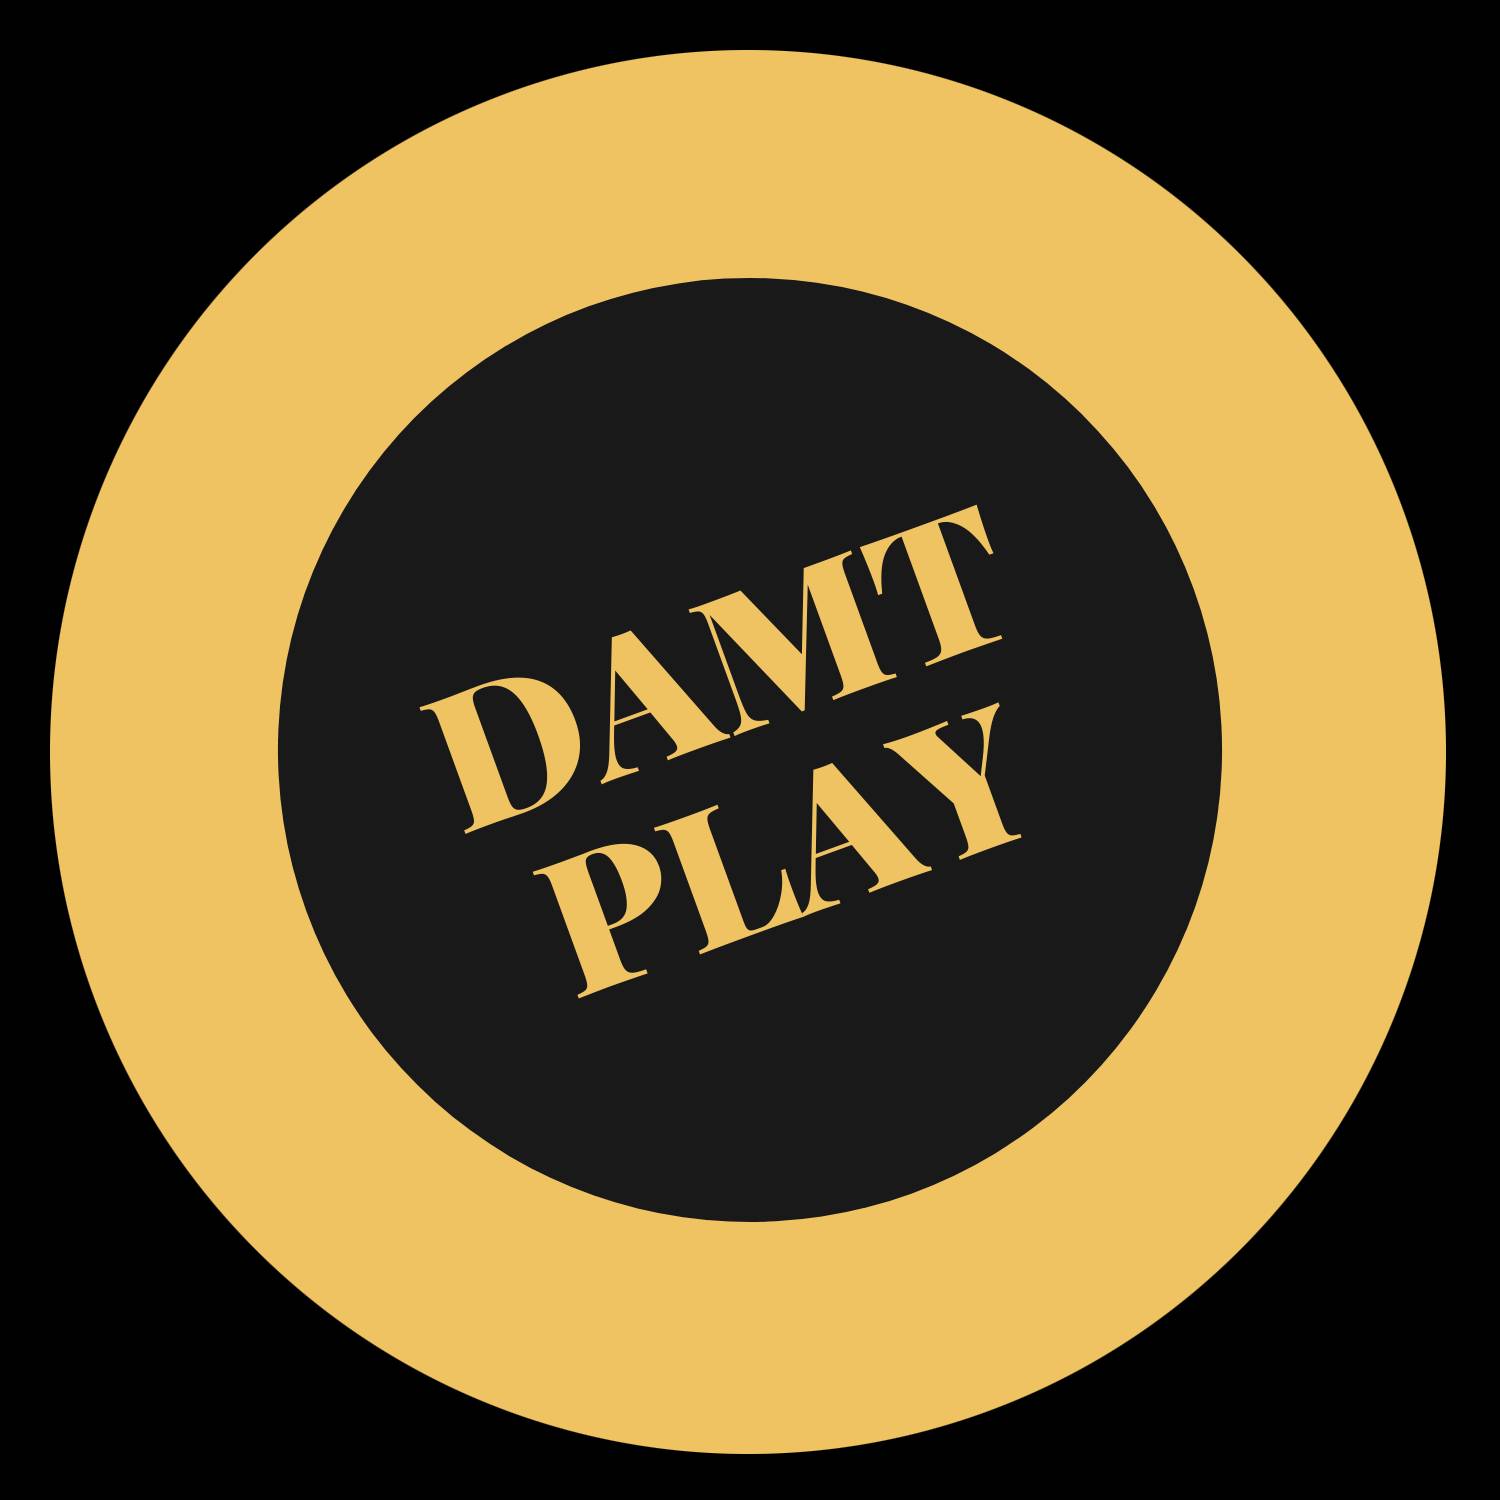 Иконка канала DAMT • PLAY